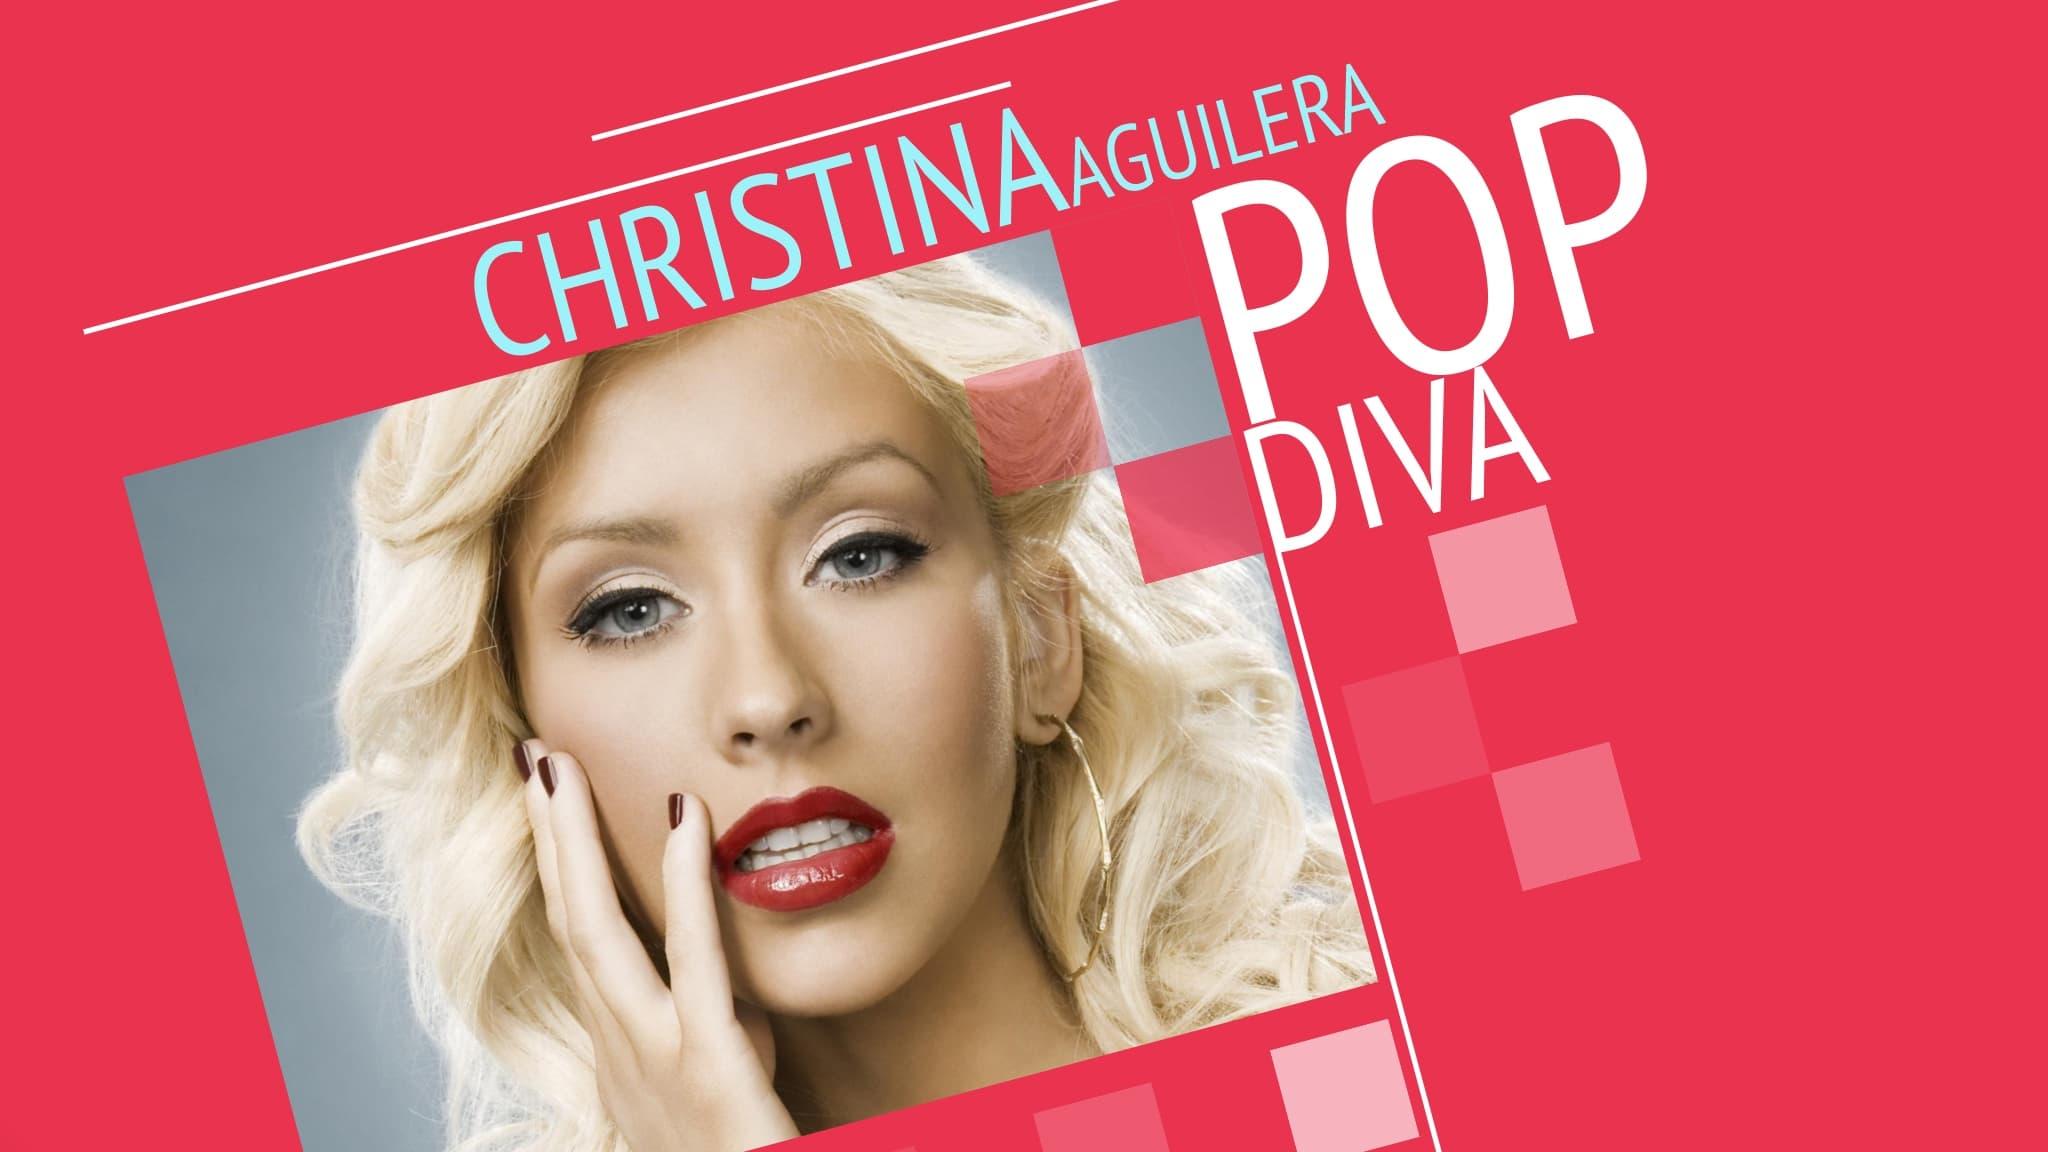 Christina Aguilera: Pop Diva backdrop